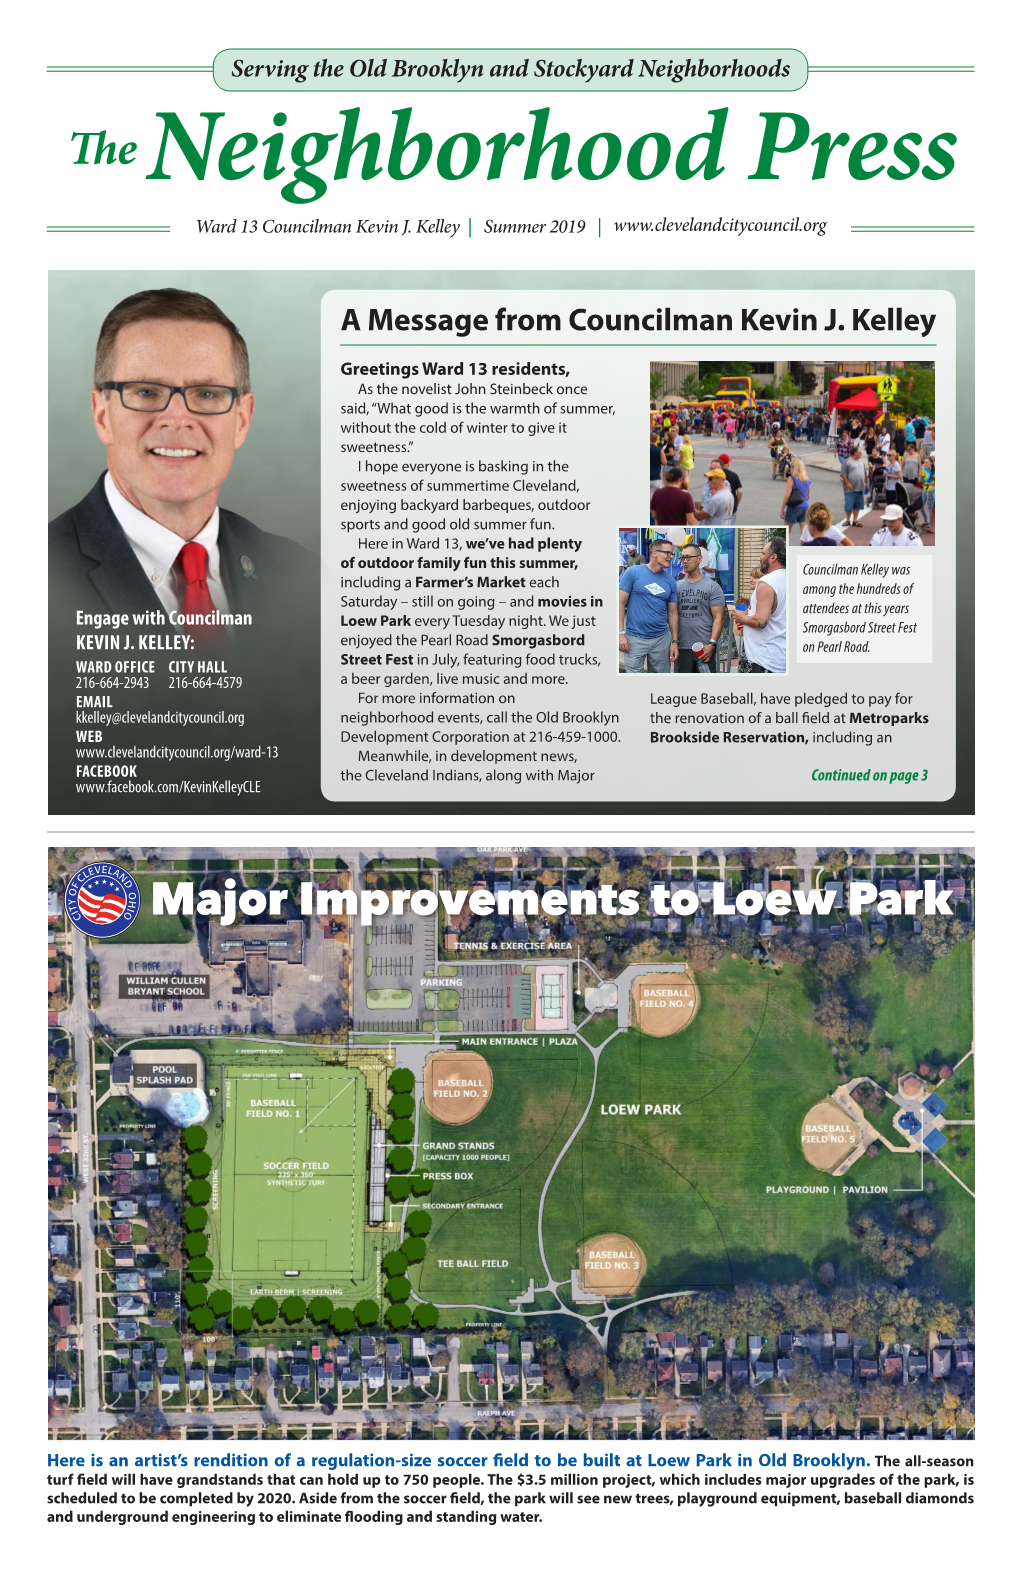 The Neighborhood Press ~ Summer 2019, Council Member Kevin J. Kelley